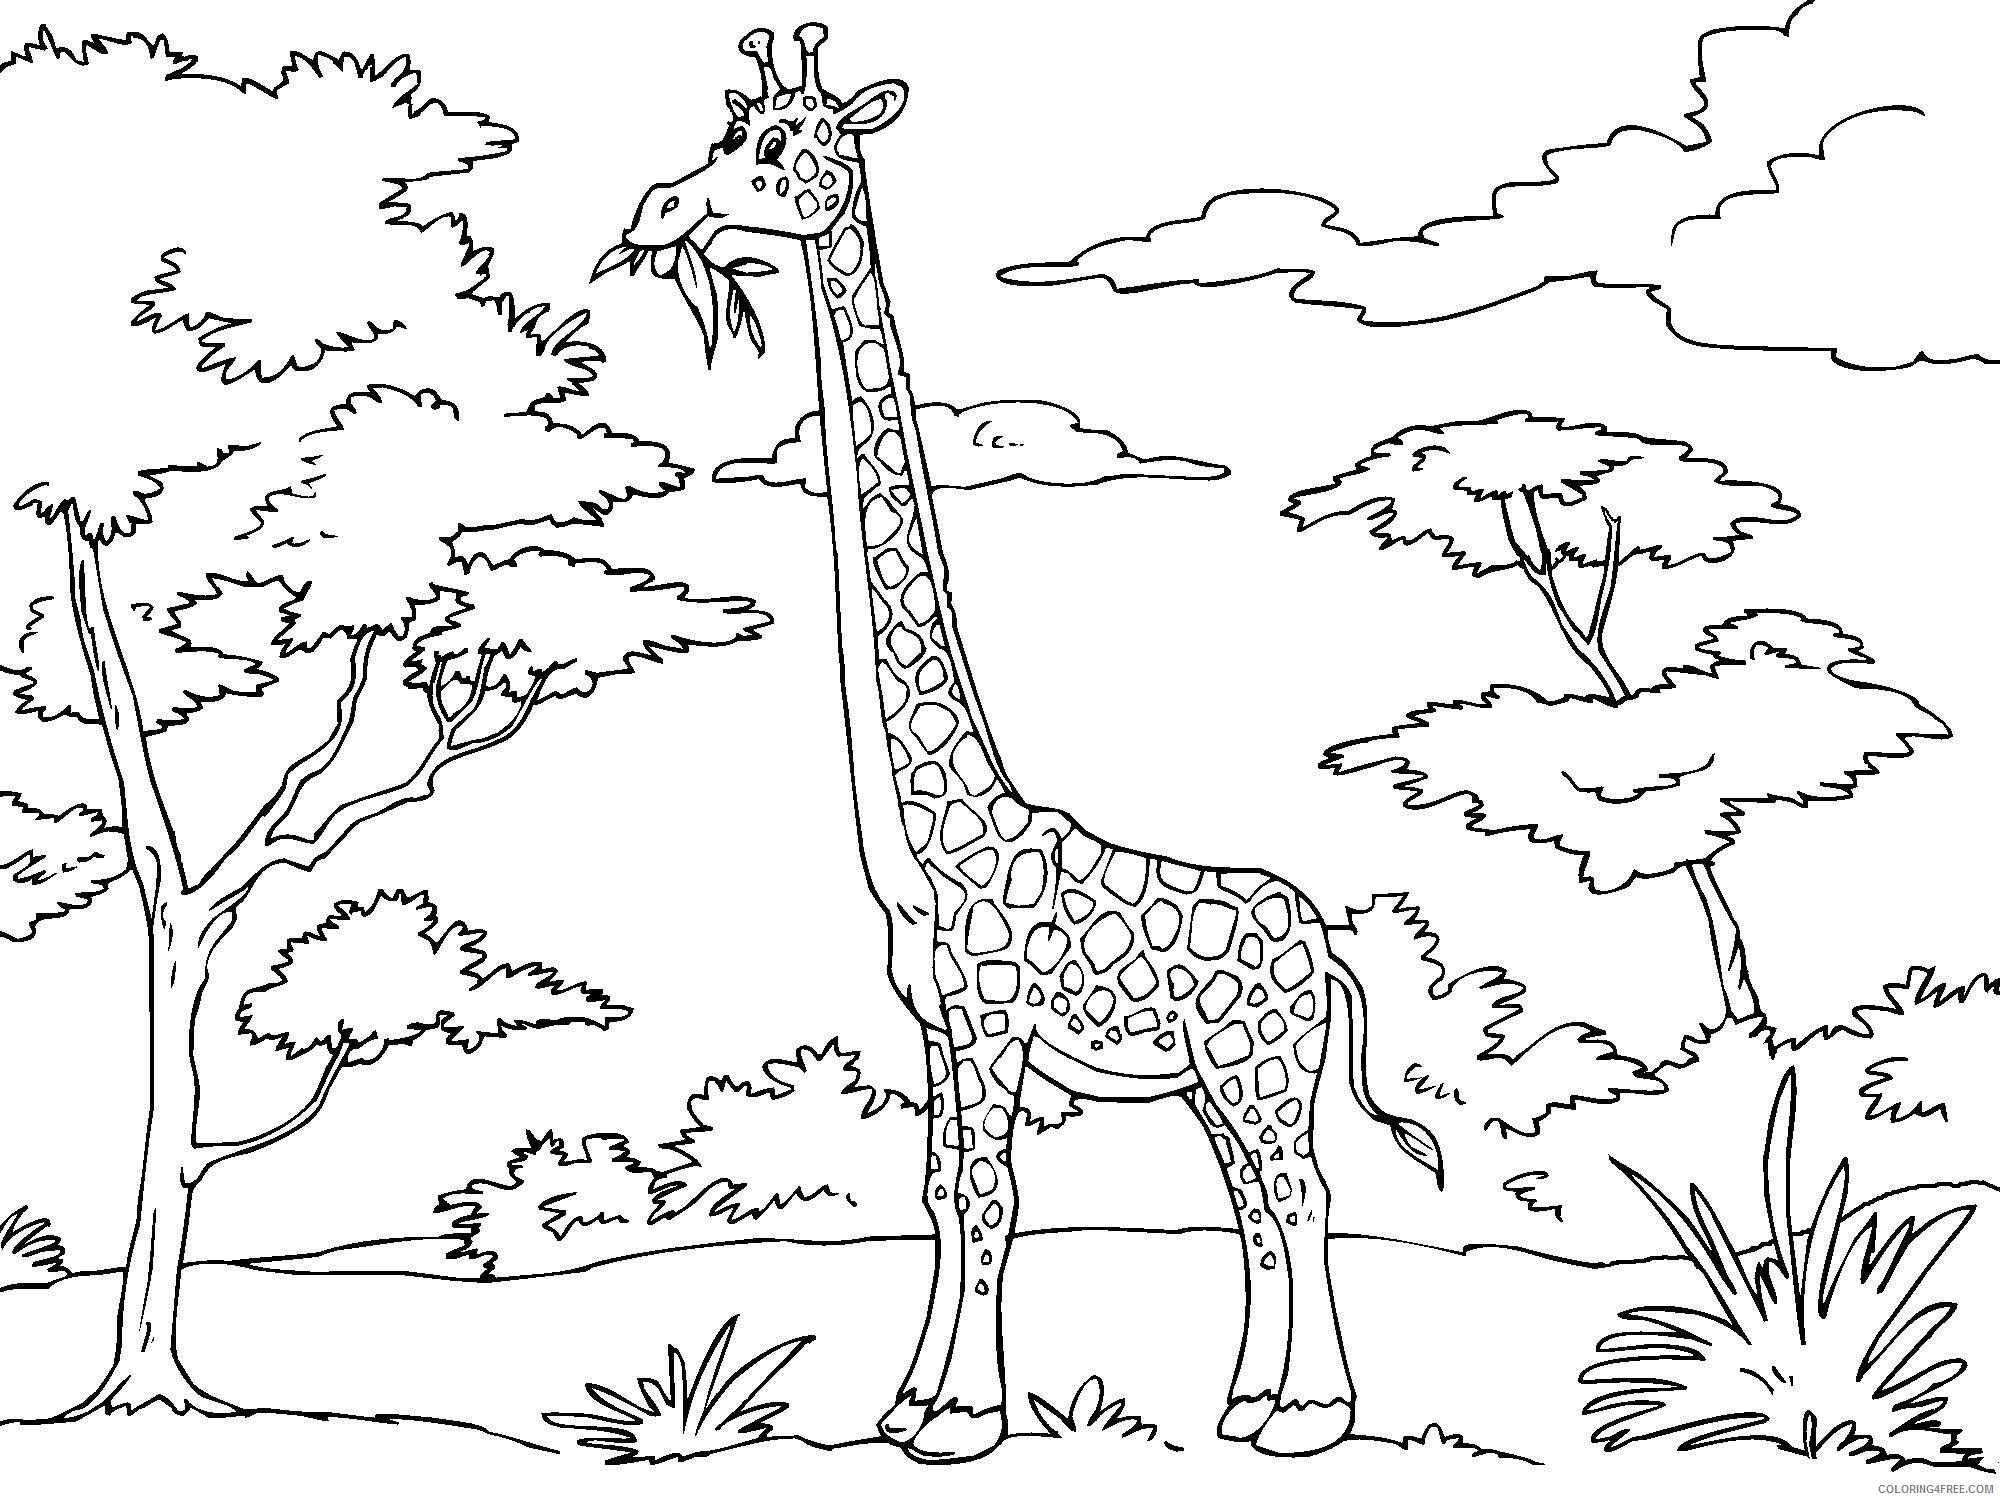 Giraffe Coloring Pages Animal Printable Sheets giraffe collection of girraffe 2021 Coloring4free